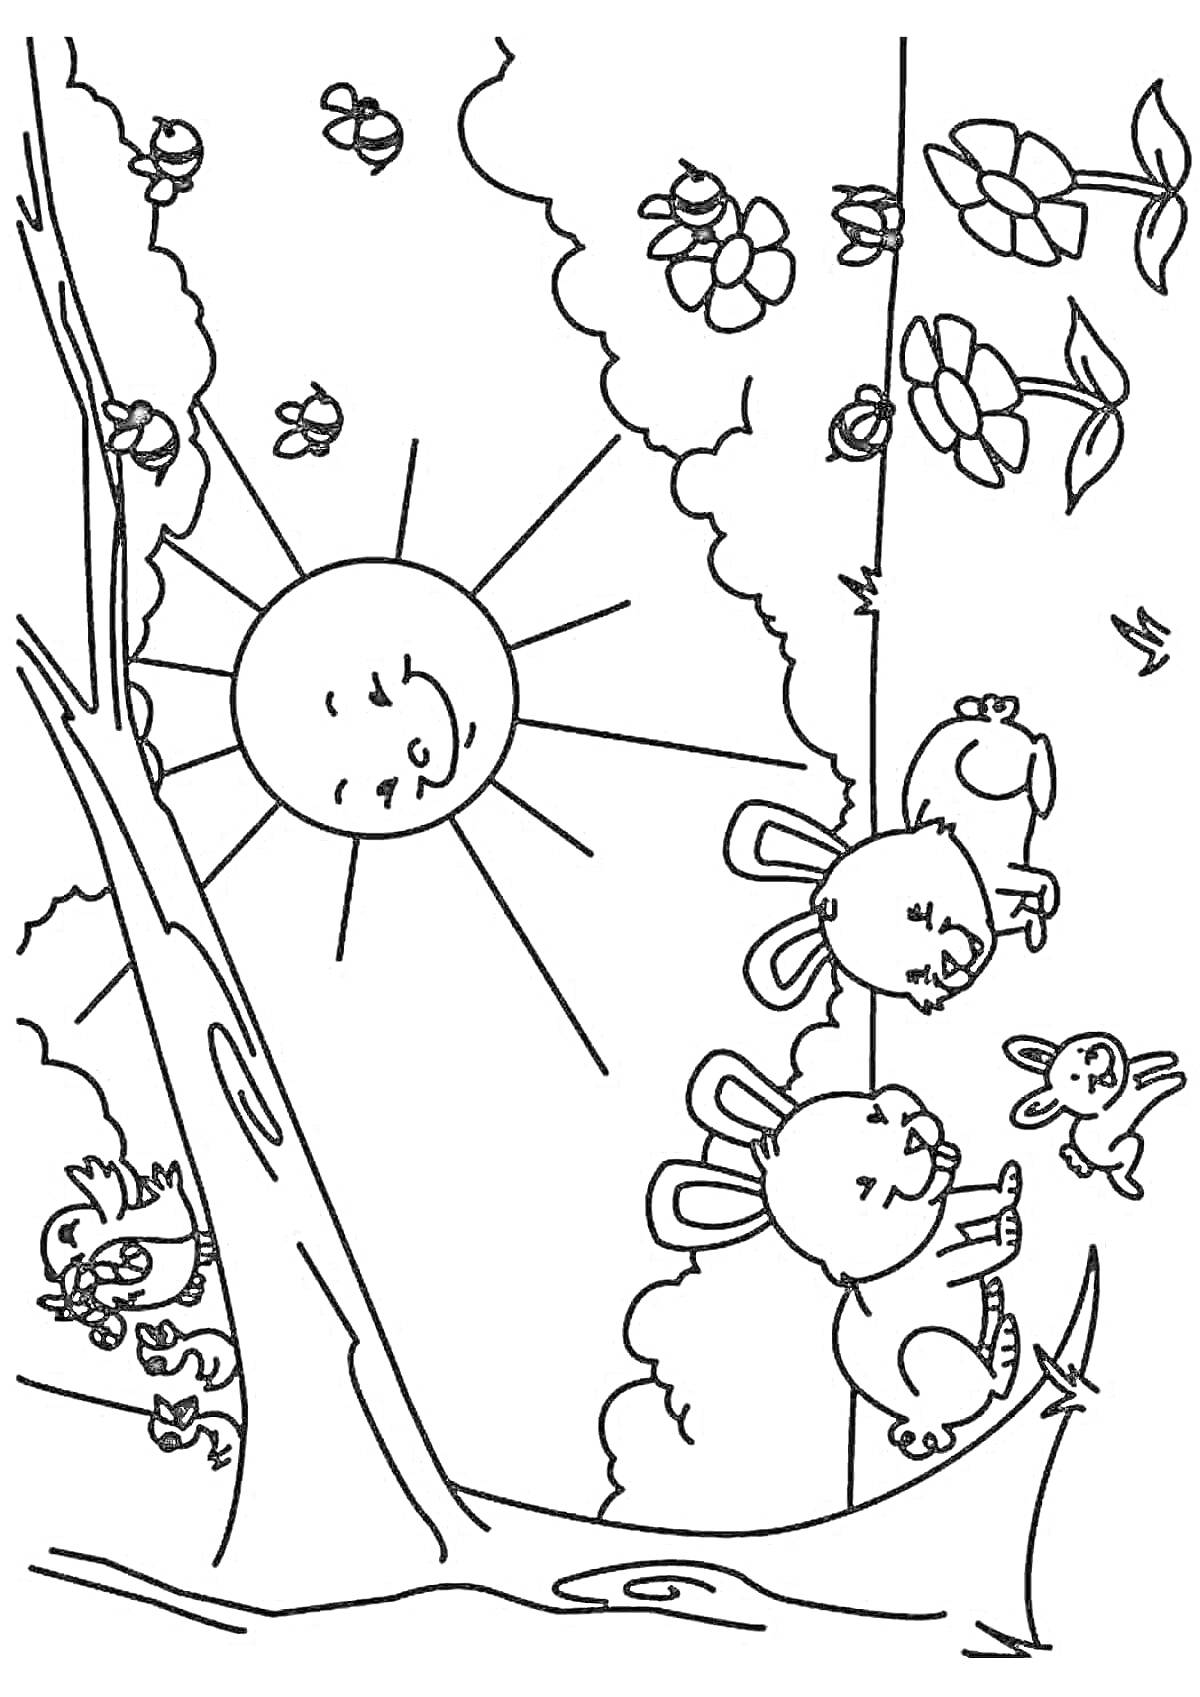 На раскраске изображено: Весна, Природа, Солнце, Облака, Цыплята, Цветы, Трава, Небо, Птица, Кролик, Деревья